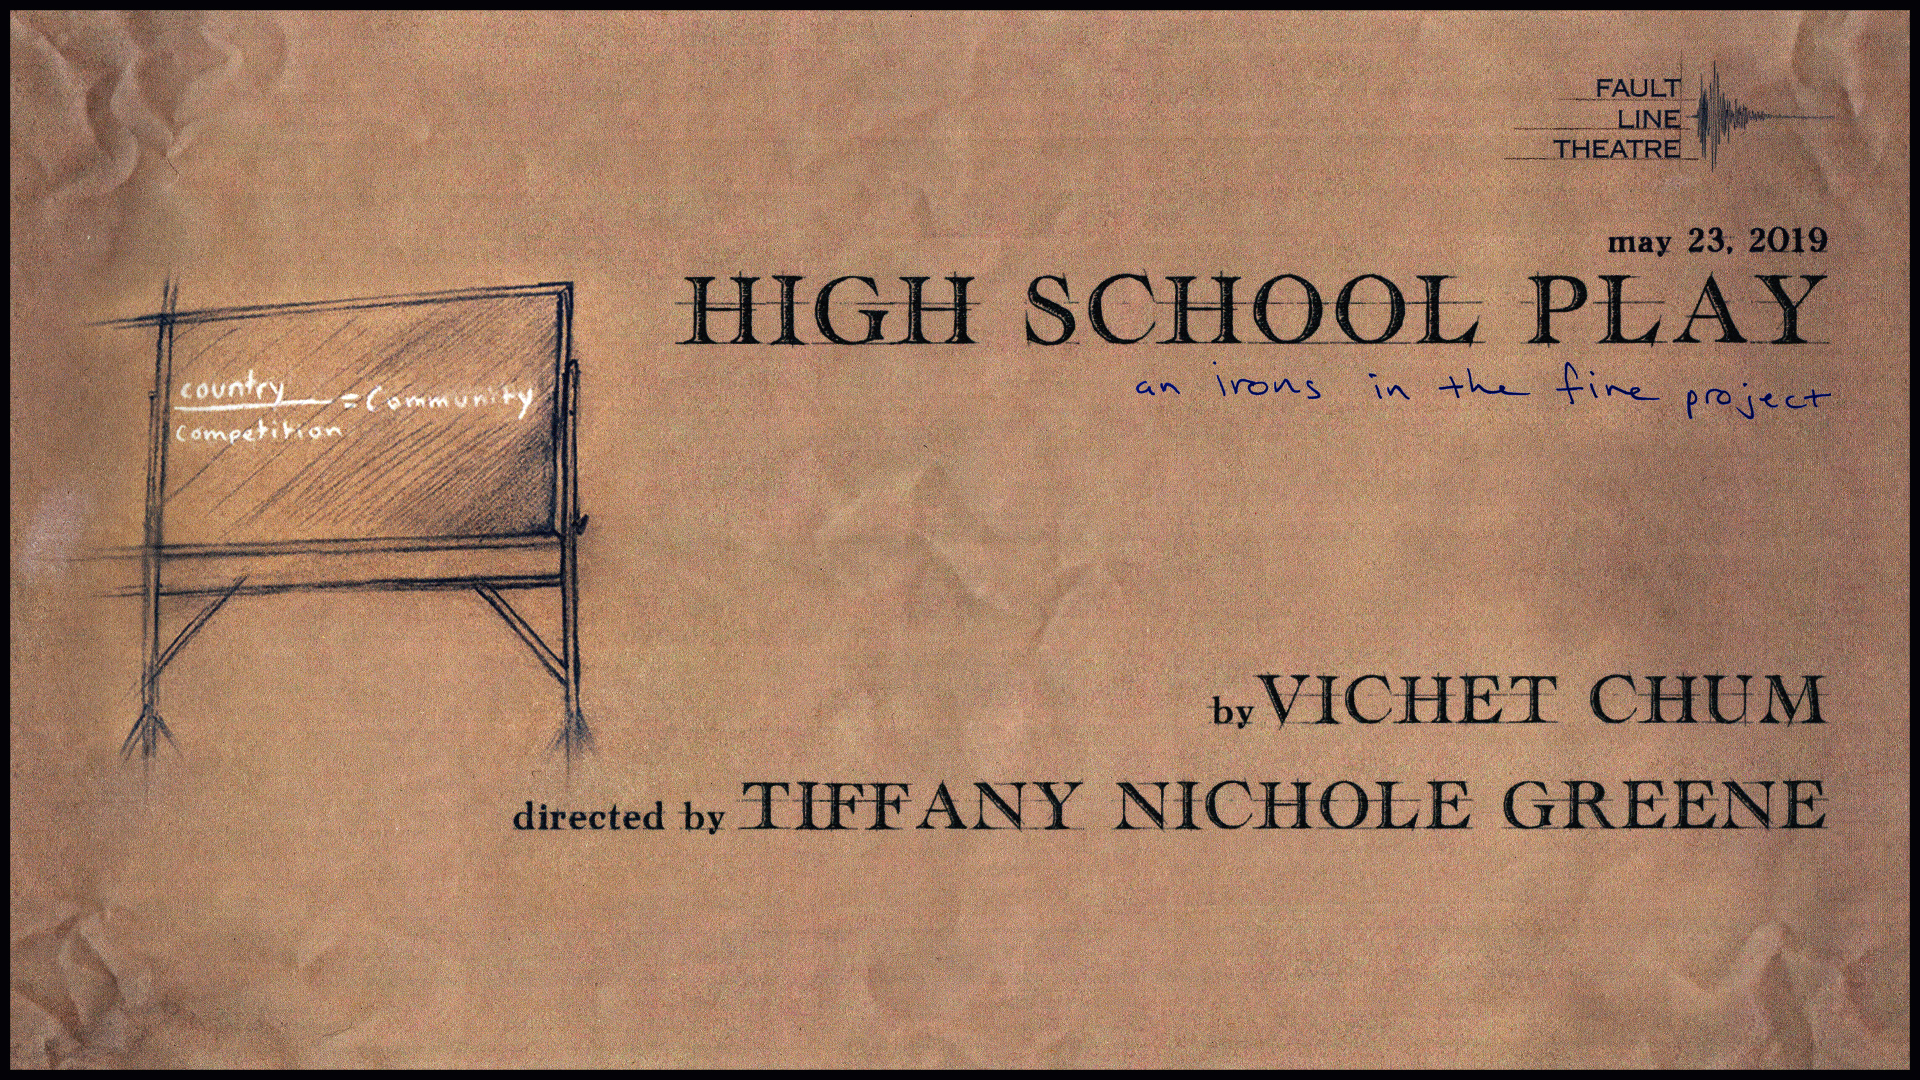 High School Play Poster.jpg